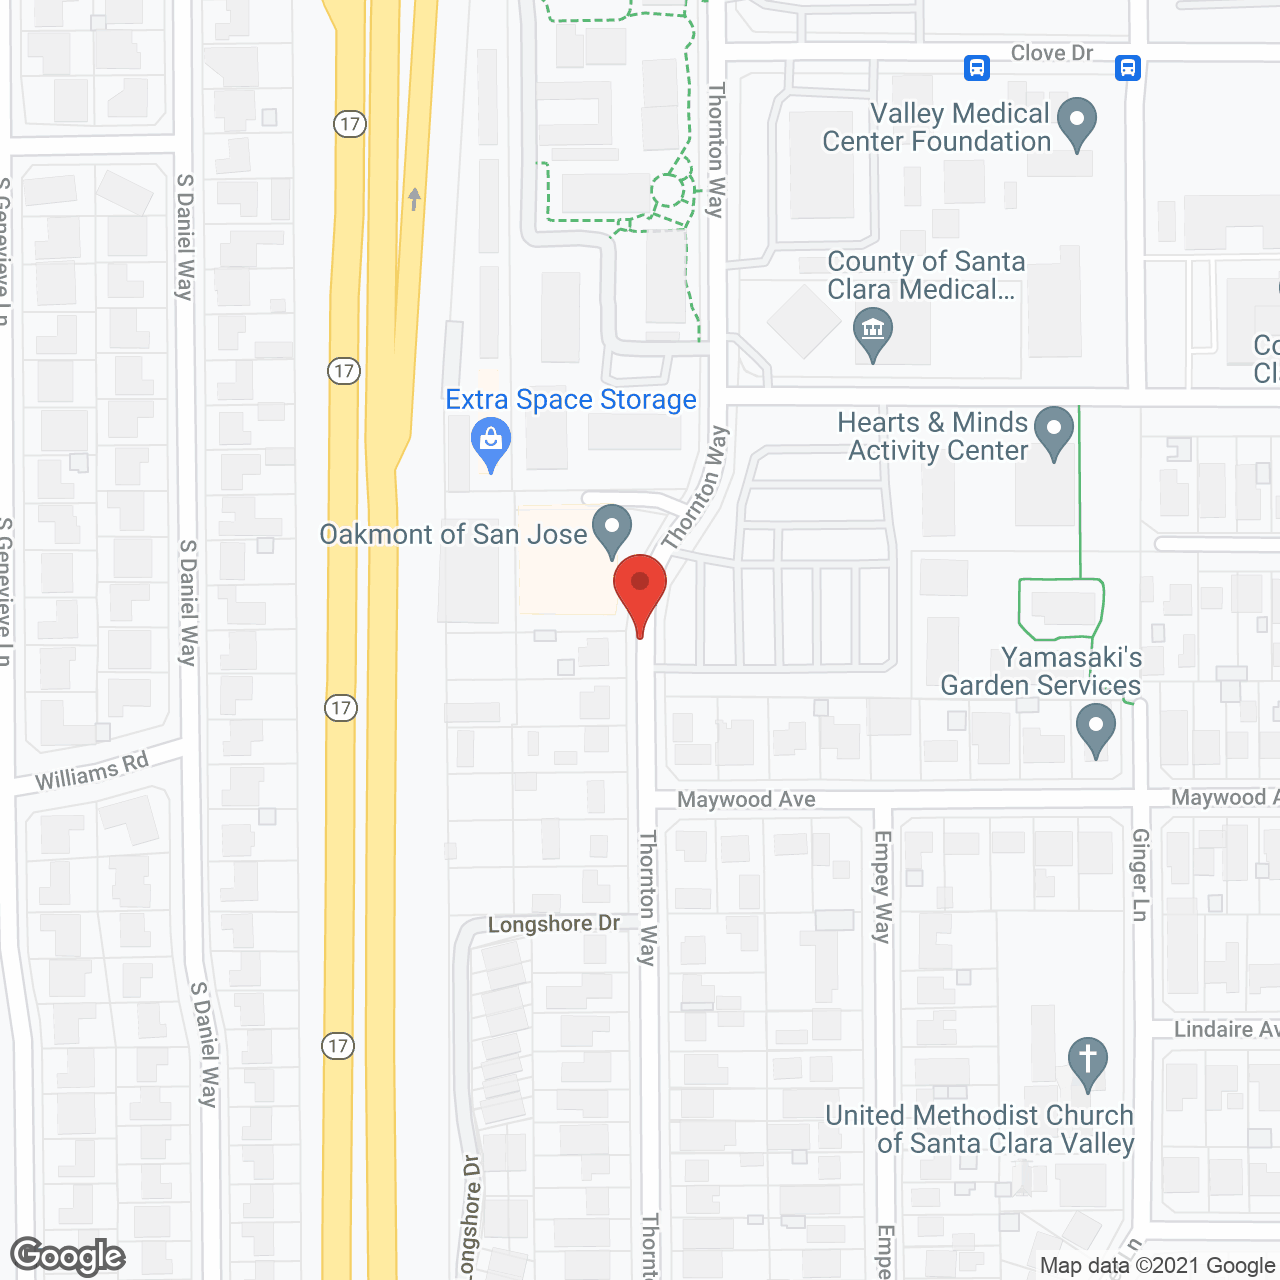 Oakmont of San Jose in google map